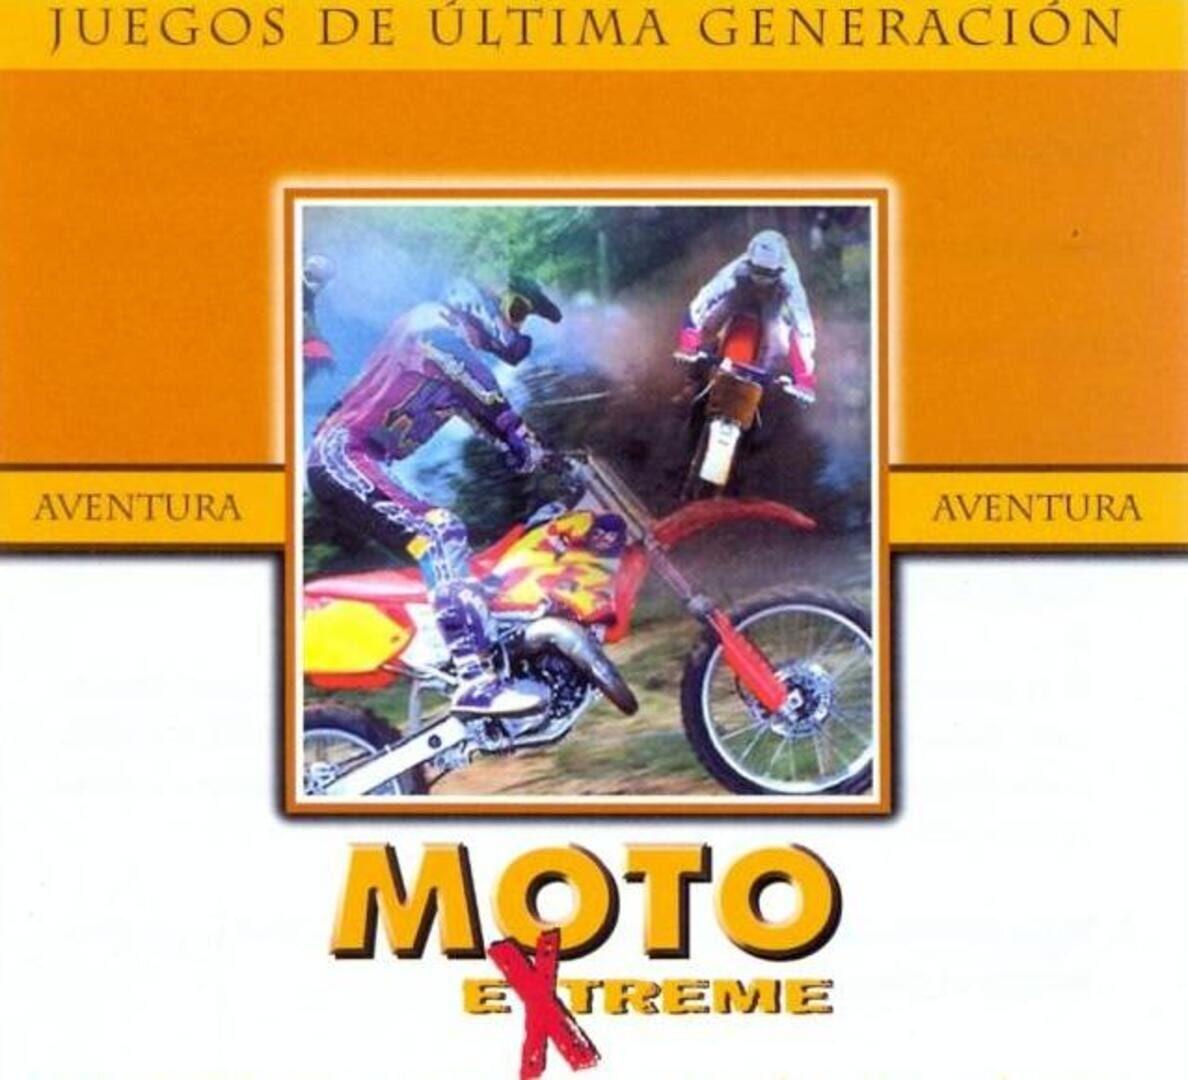 Moto Extreme cover art